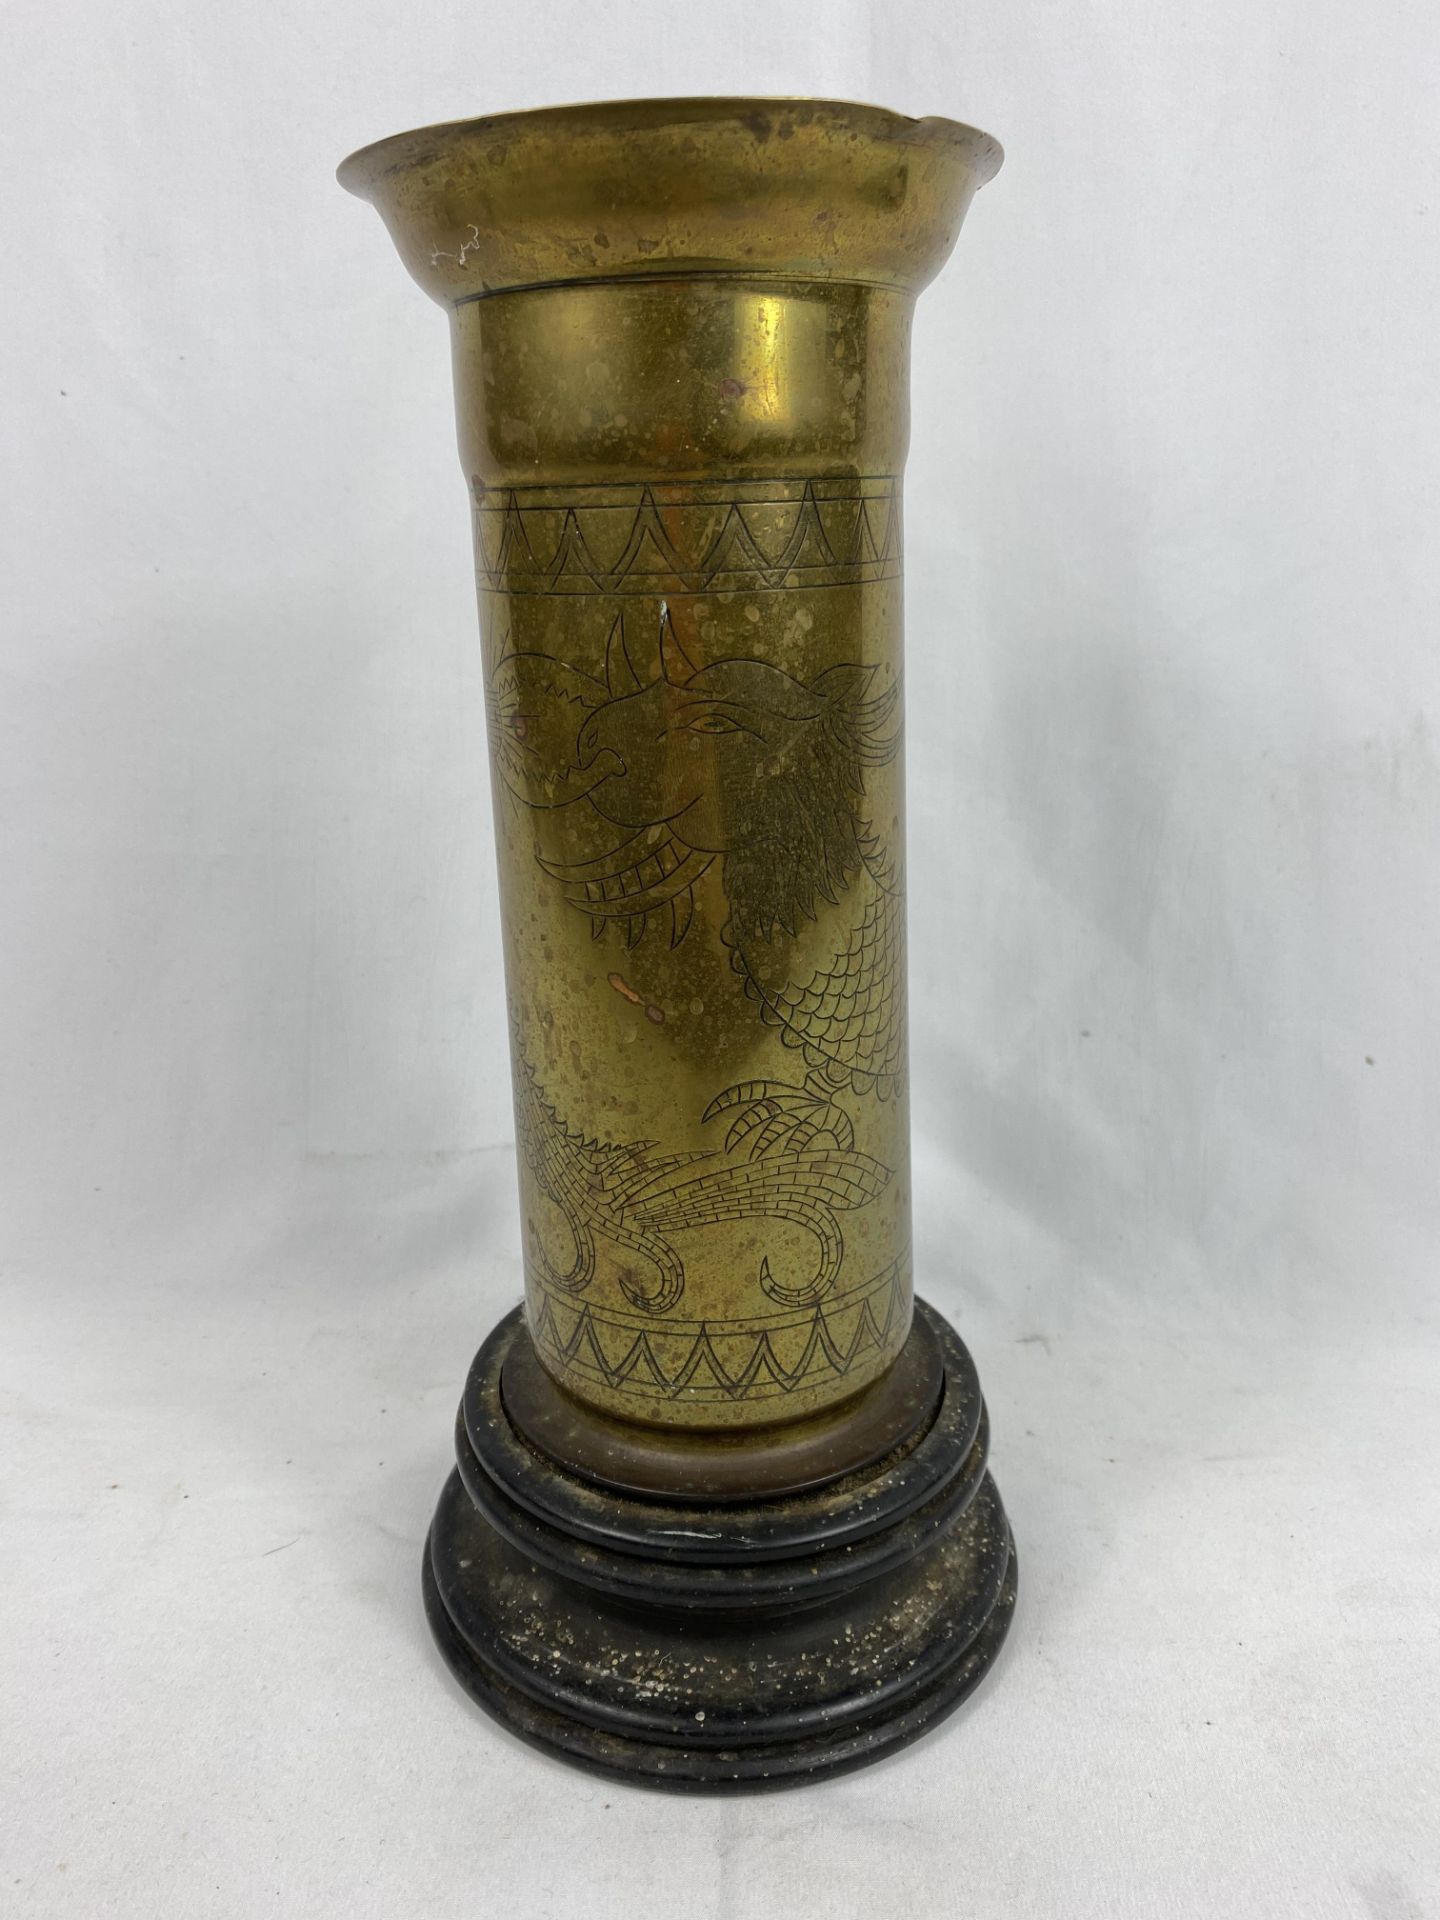 Brass vase mounted on a wood base